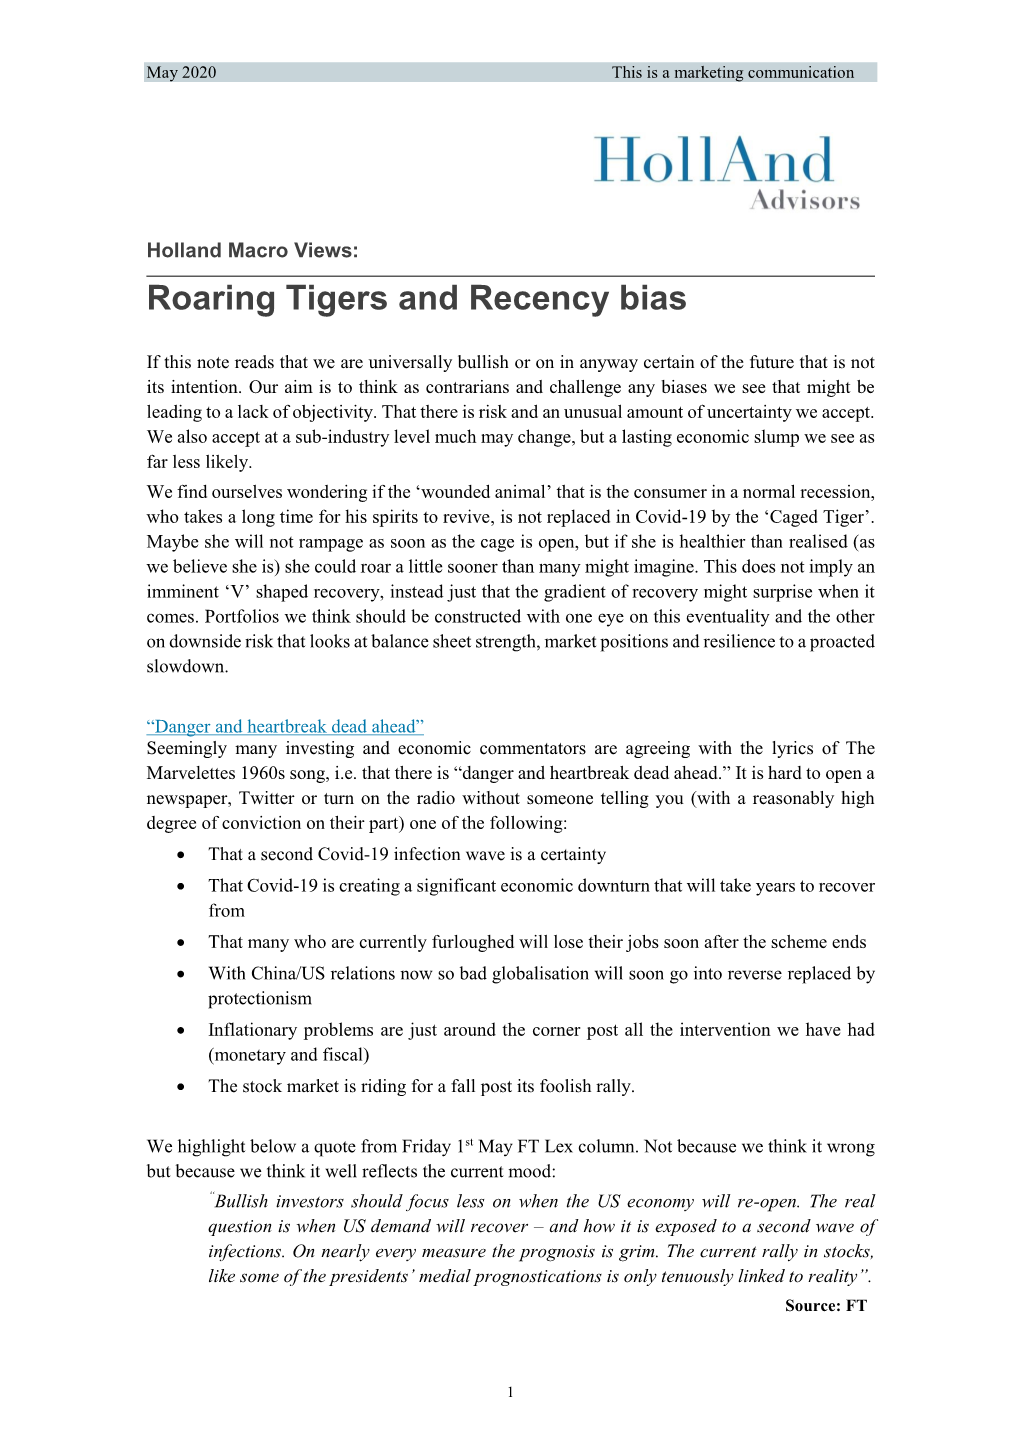 Roaring Tigers and Recency Bias